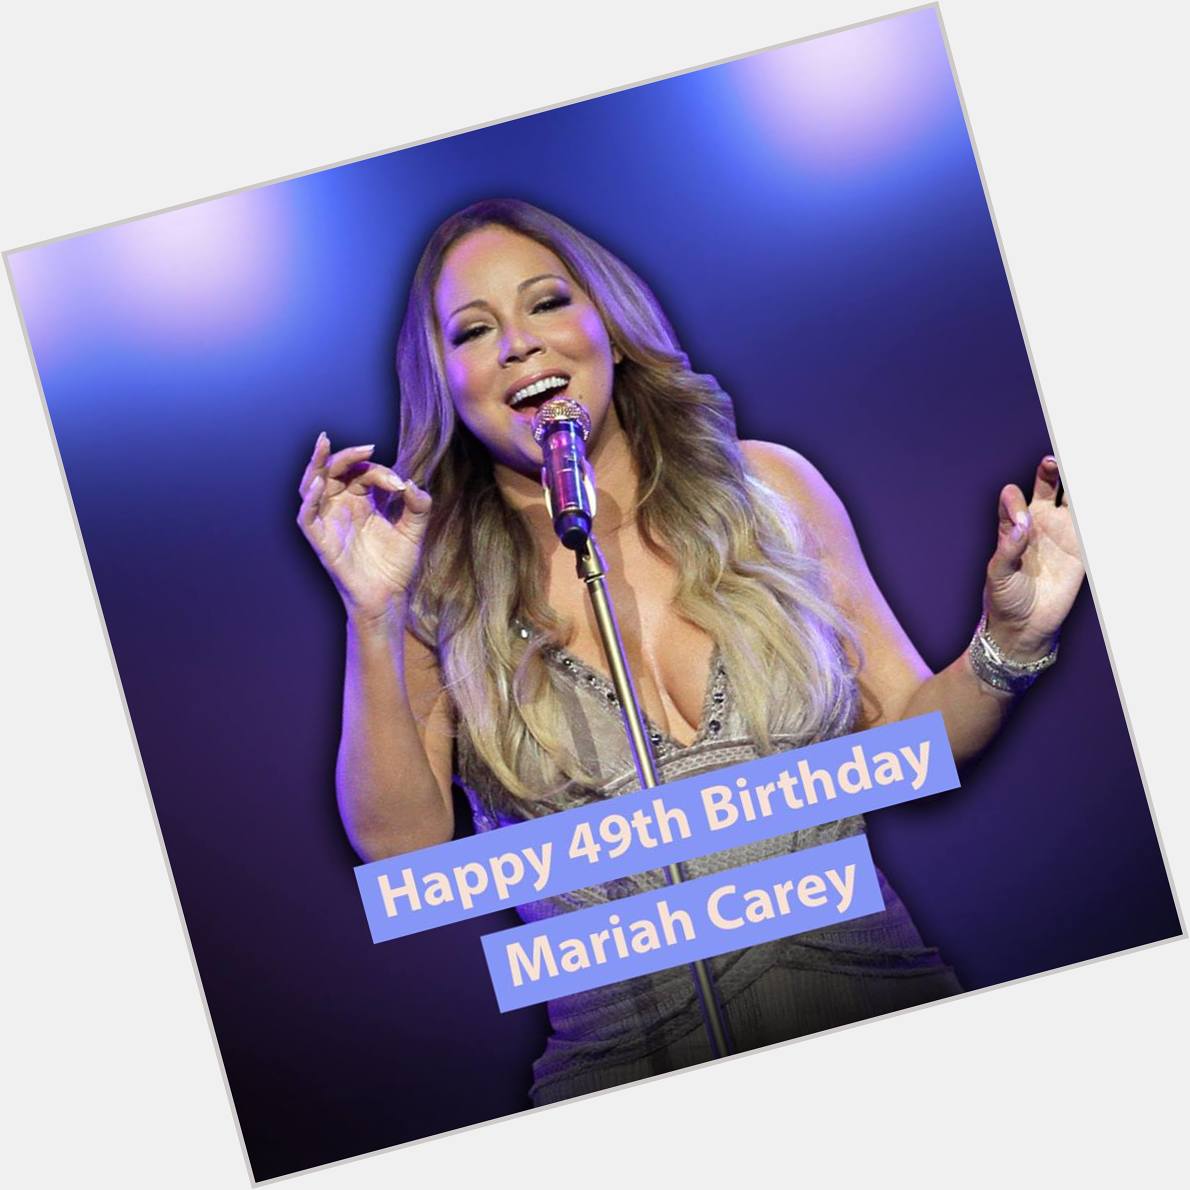 HAPPY BIRTHDAY! Mariah Carey turns 49 today!    